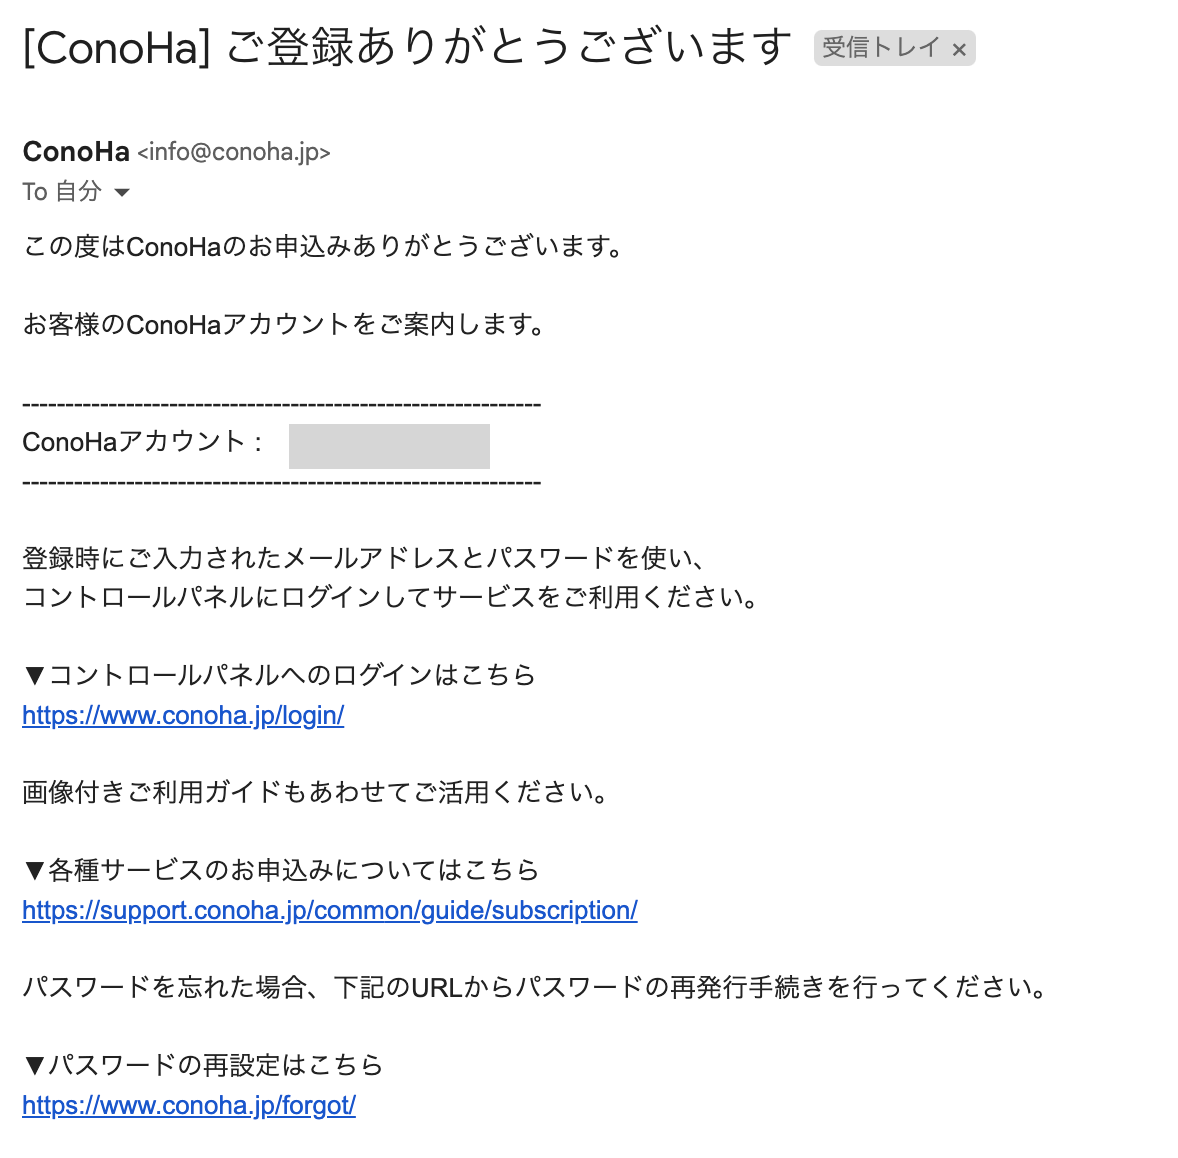 ConoHa WING登録完了のメール